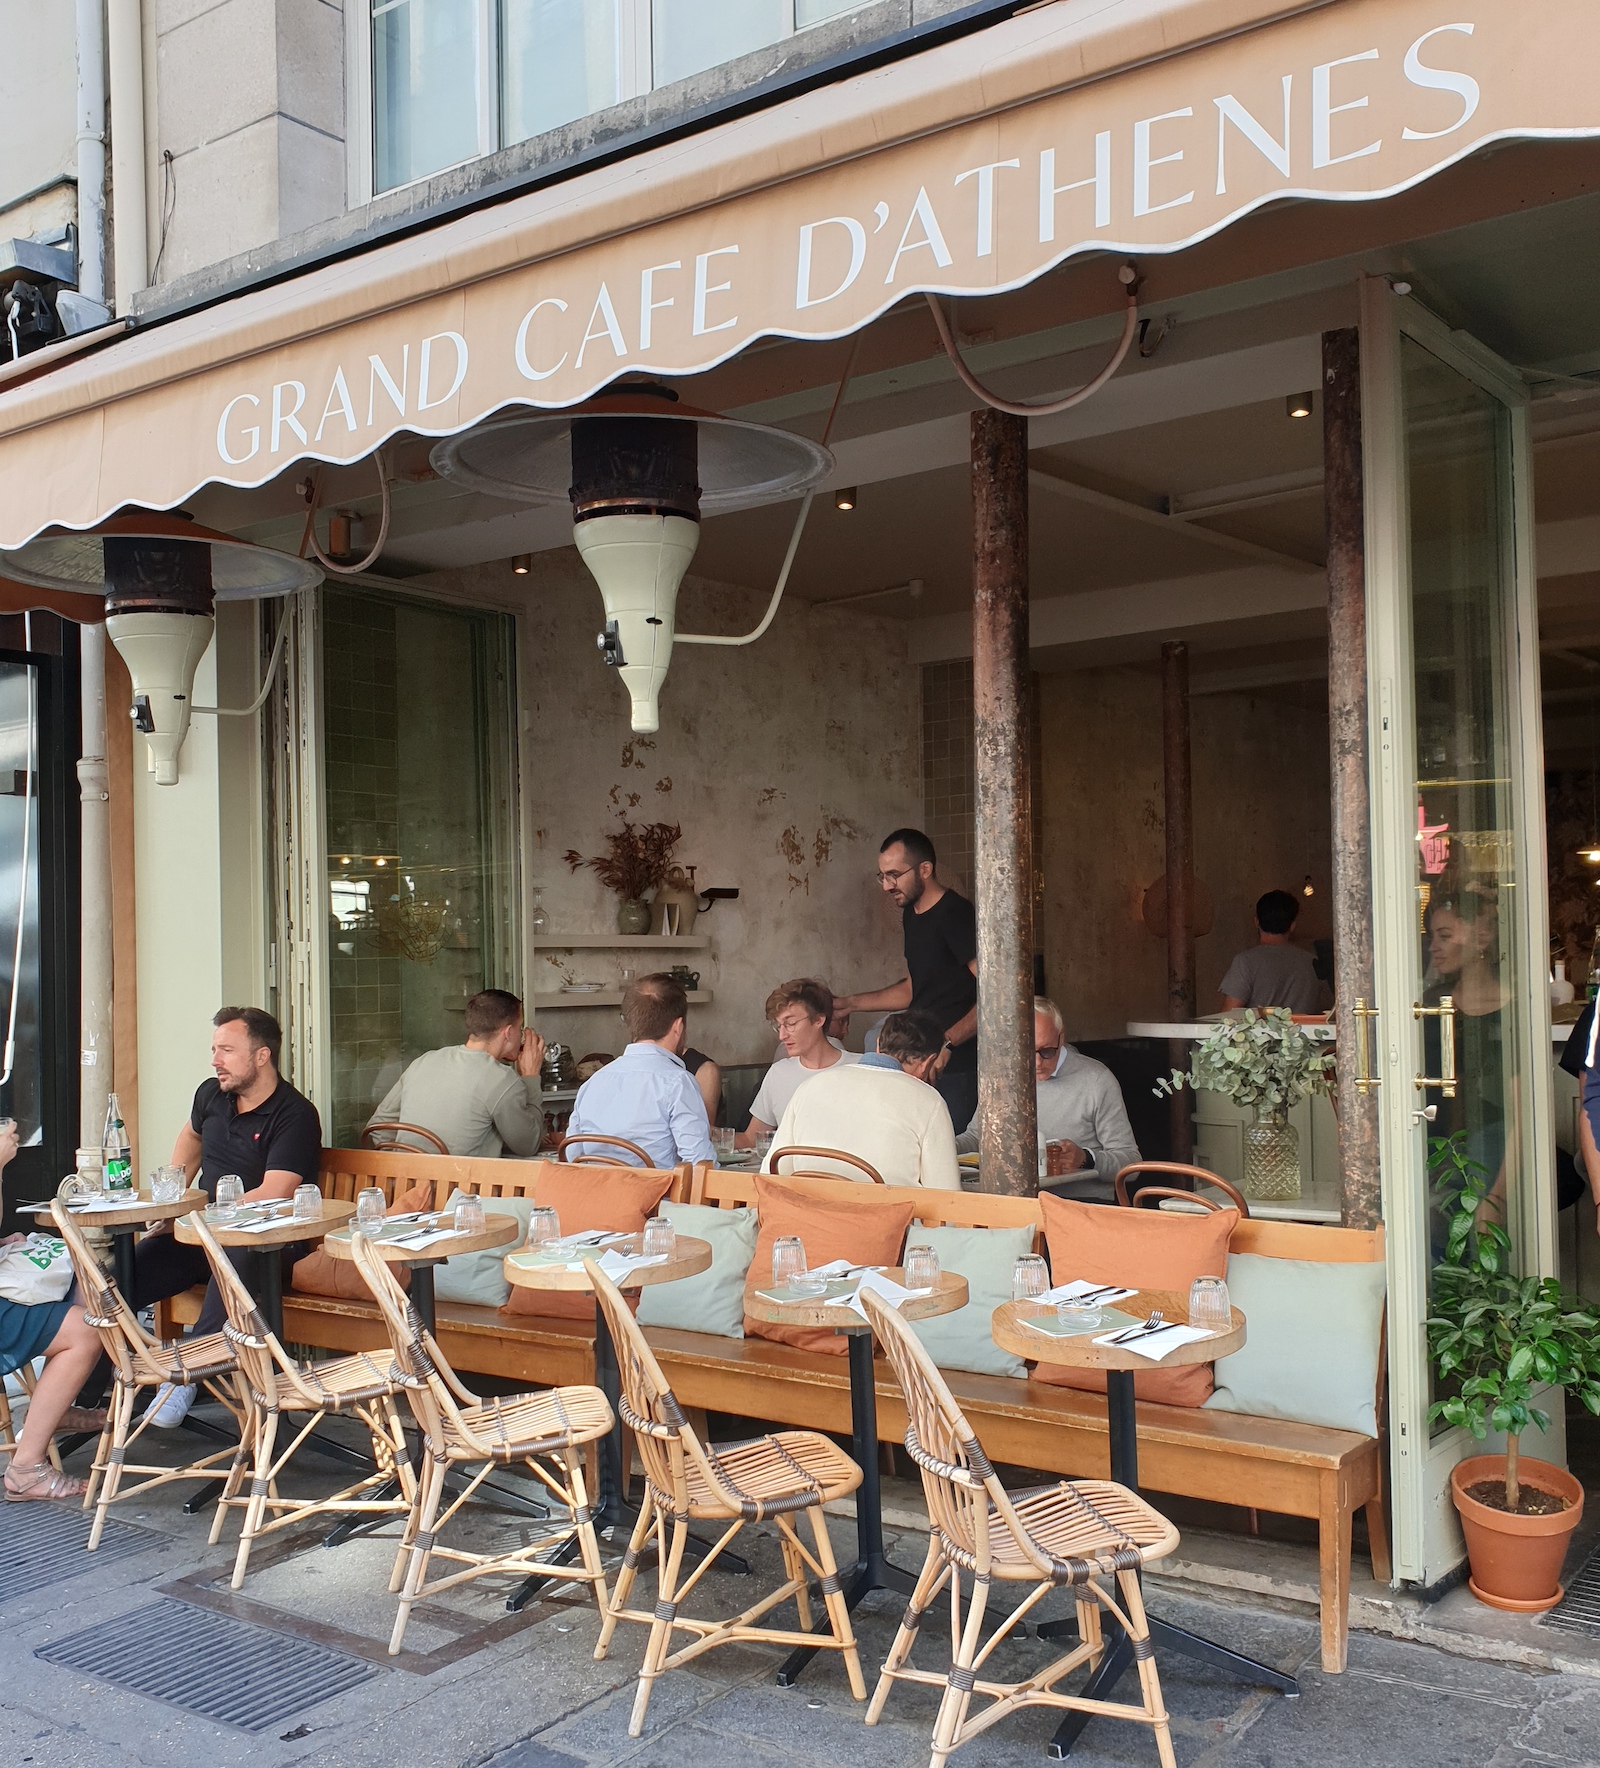 Grand Café d'Athènes Restaurant Paris 1